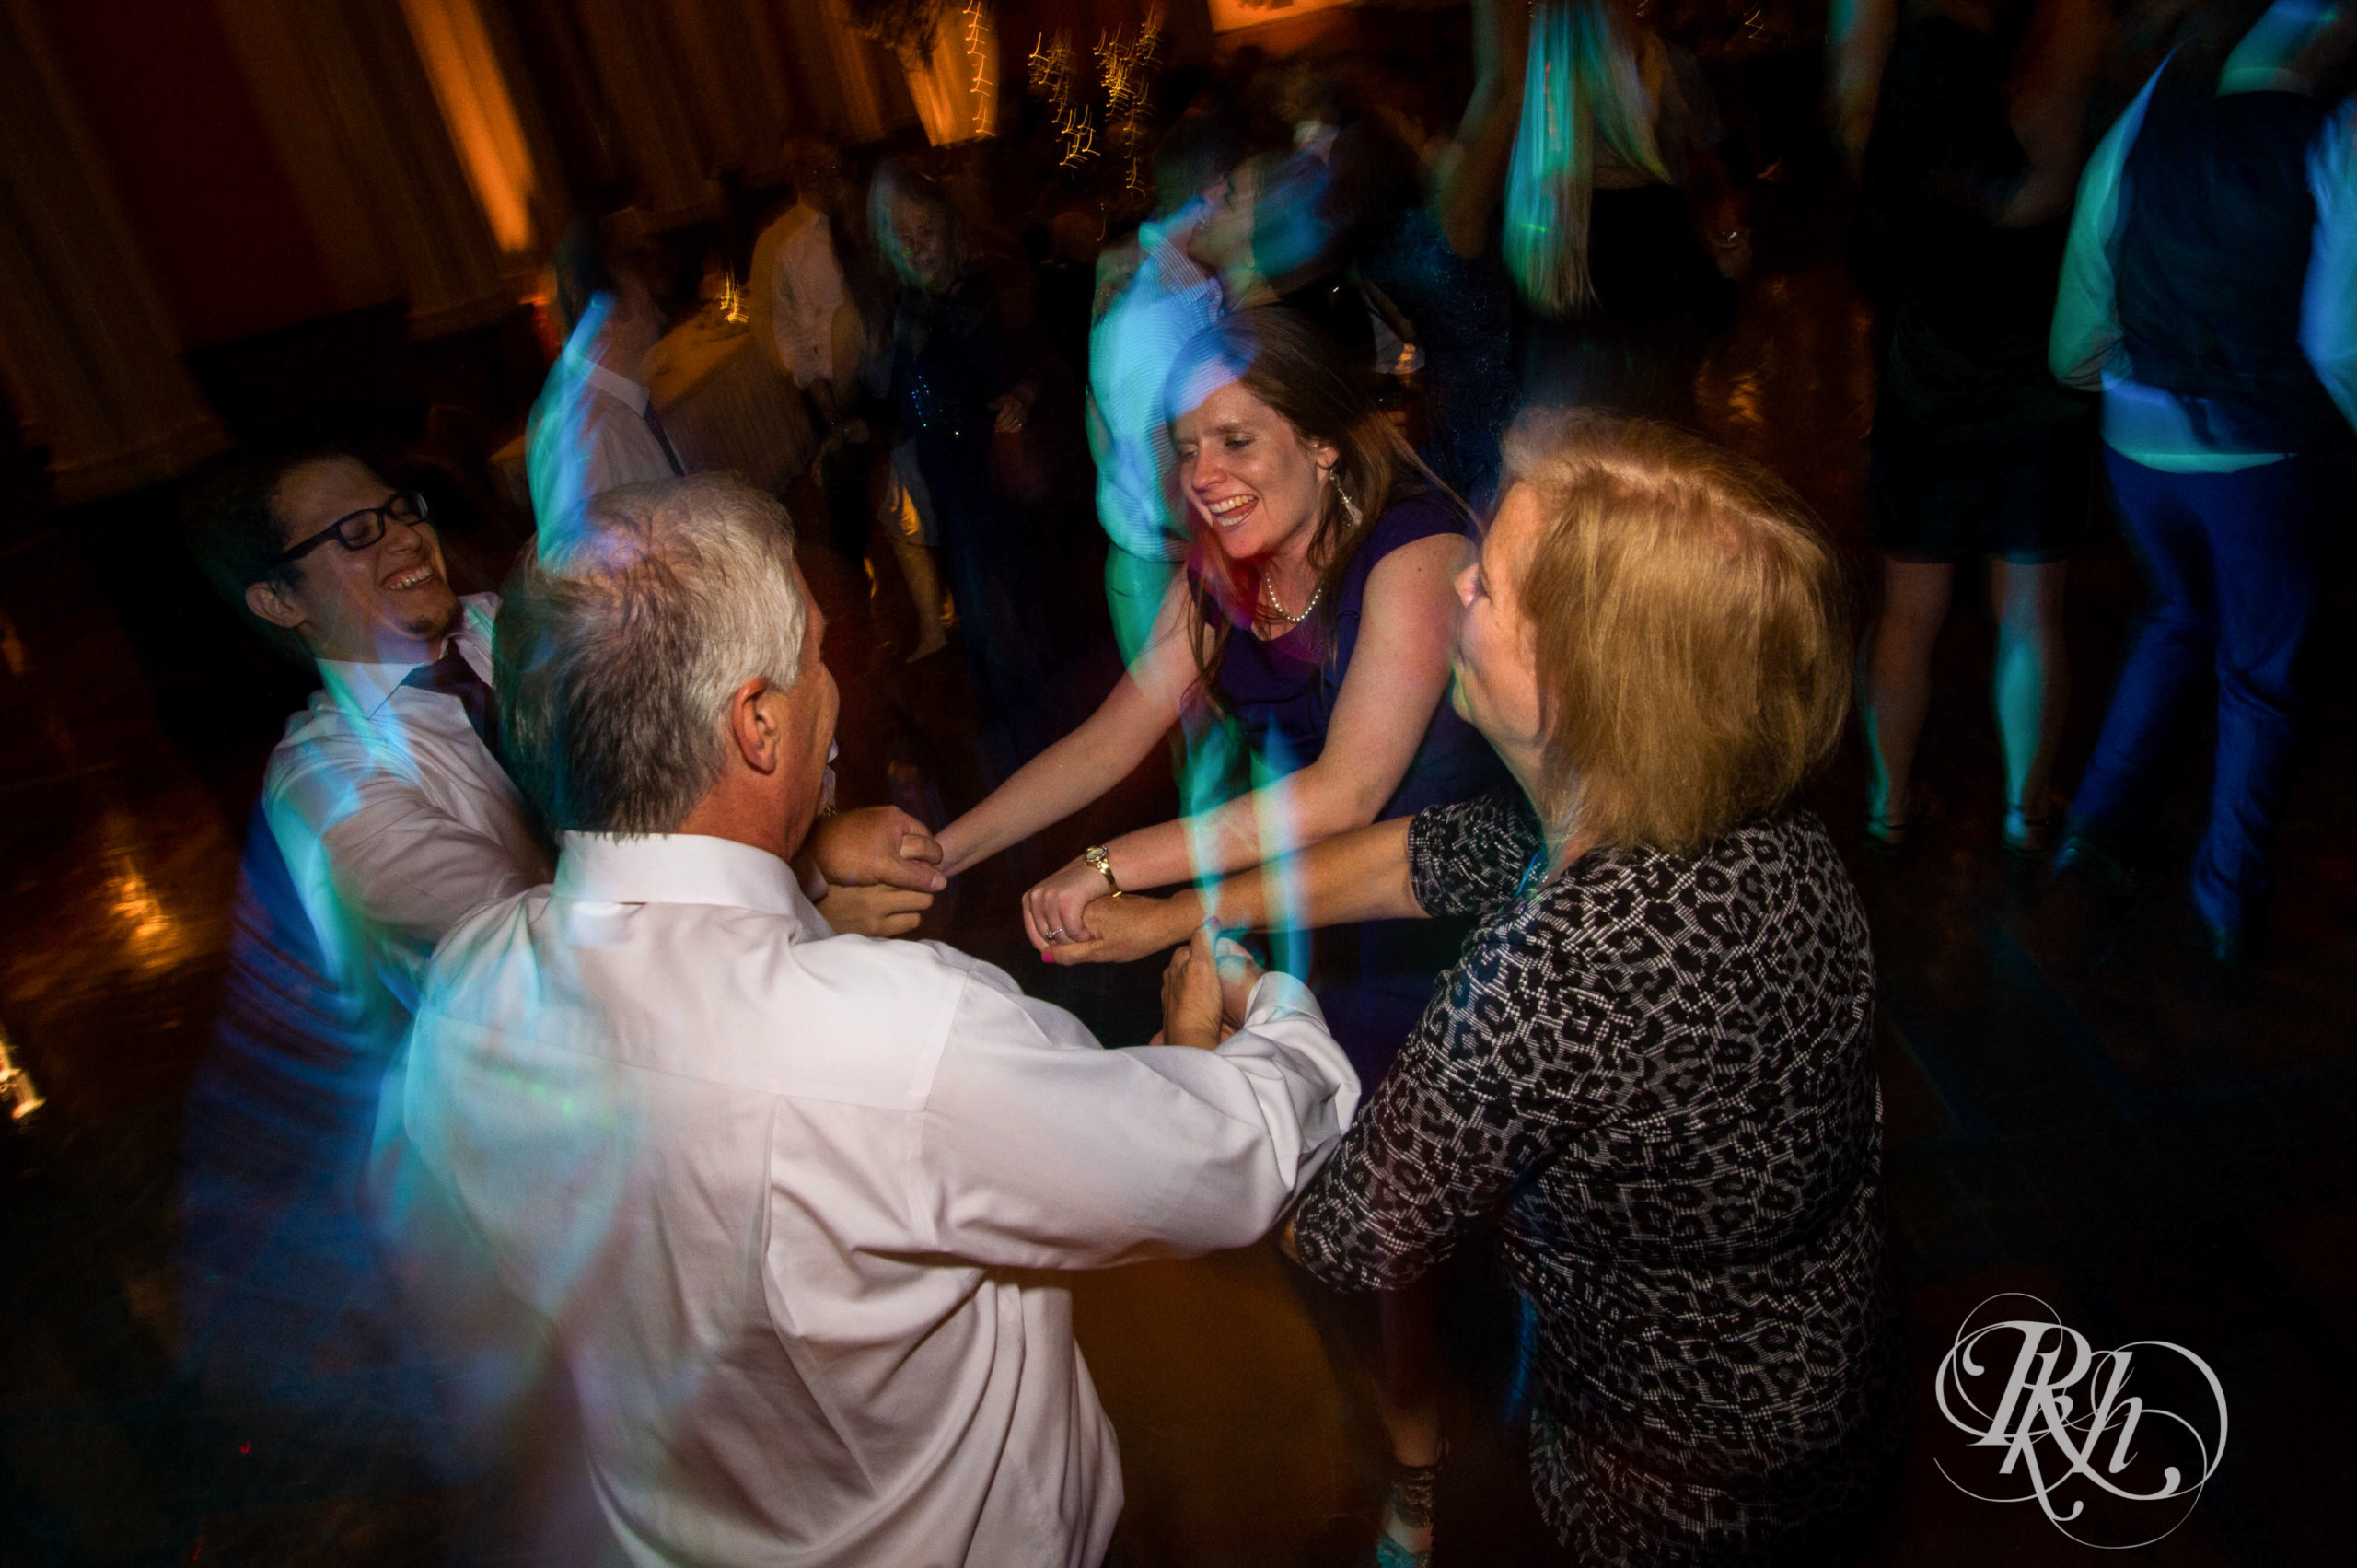 Guests dance during wedding reception on wedding day at Landmark Center in Saint Paul, Minnesota.